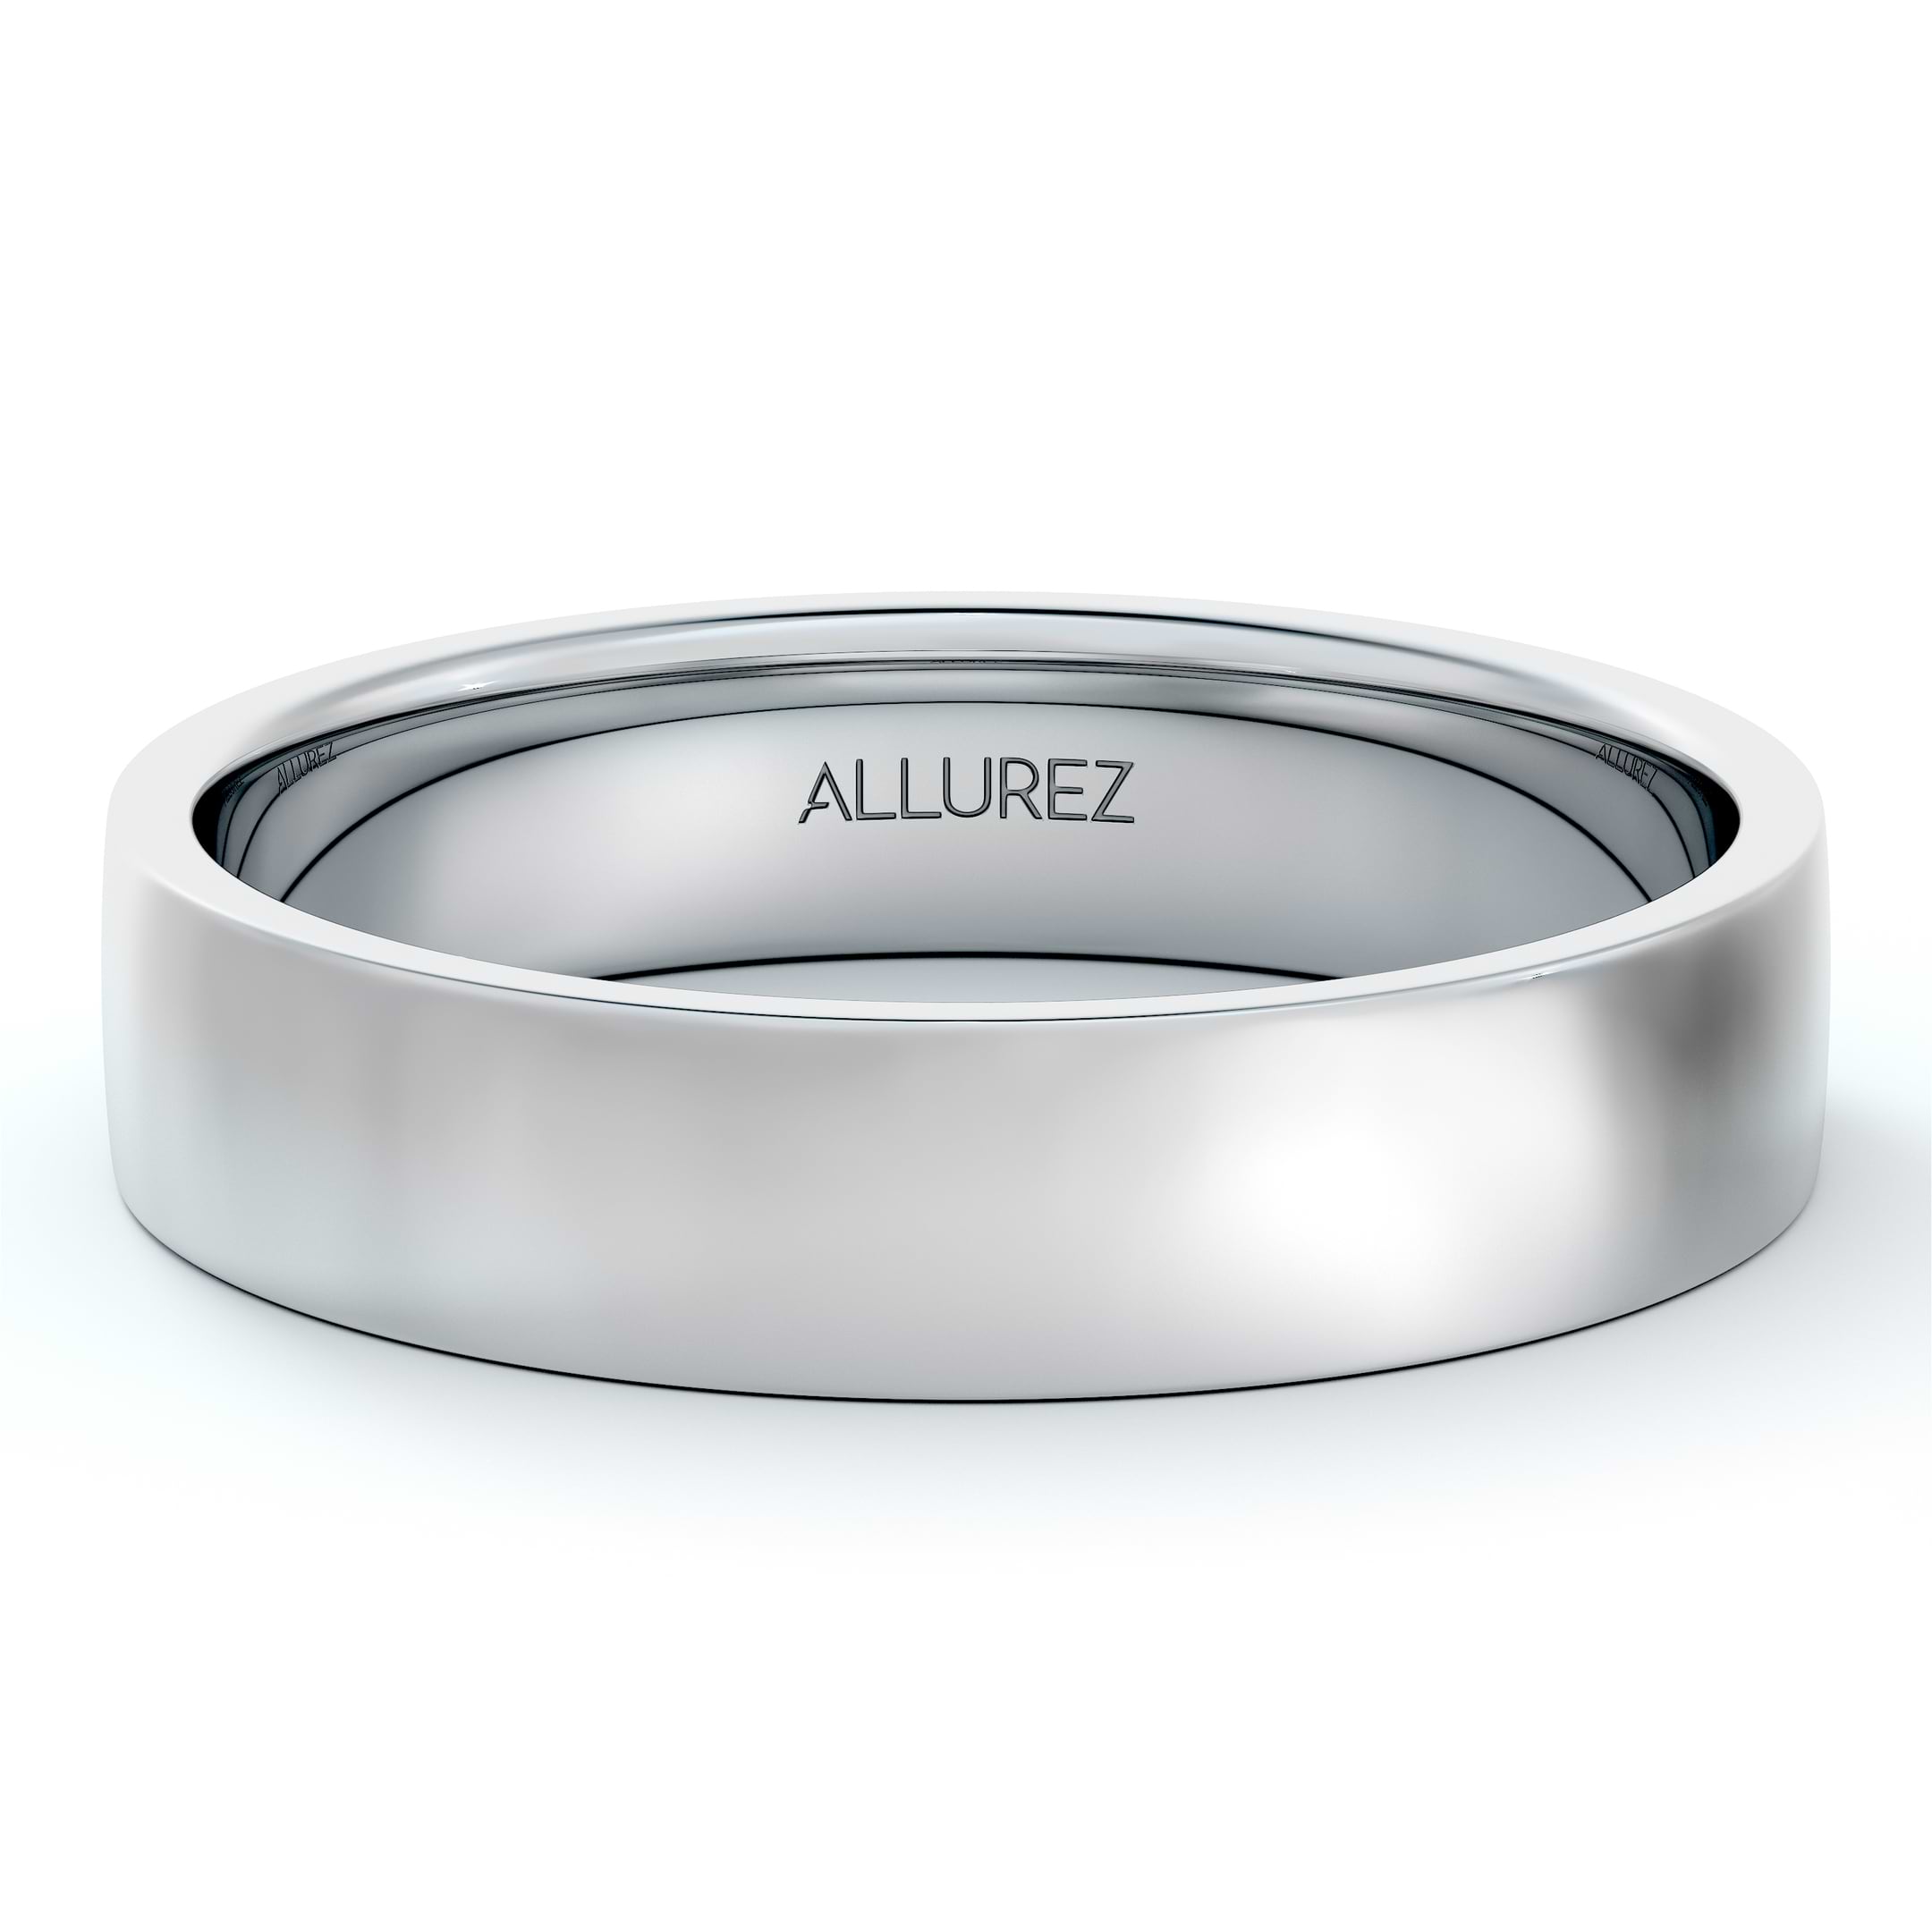 950 Palladium Wedding Band Plain Ring Flat Comfort-Fit (4 mm)